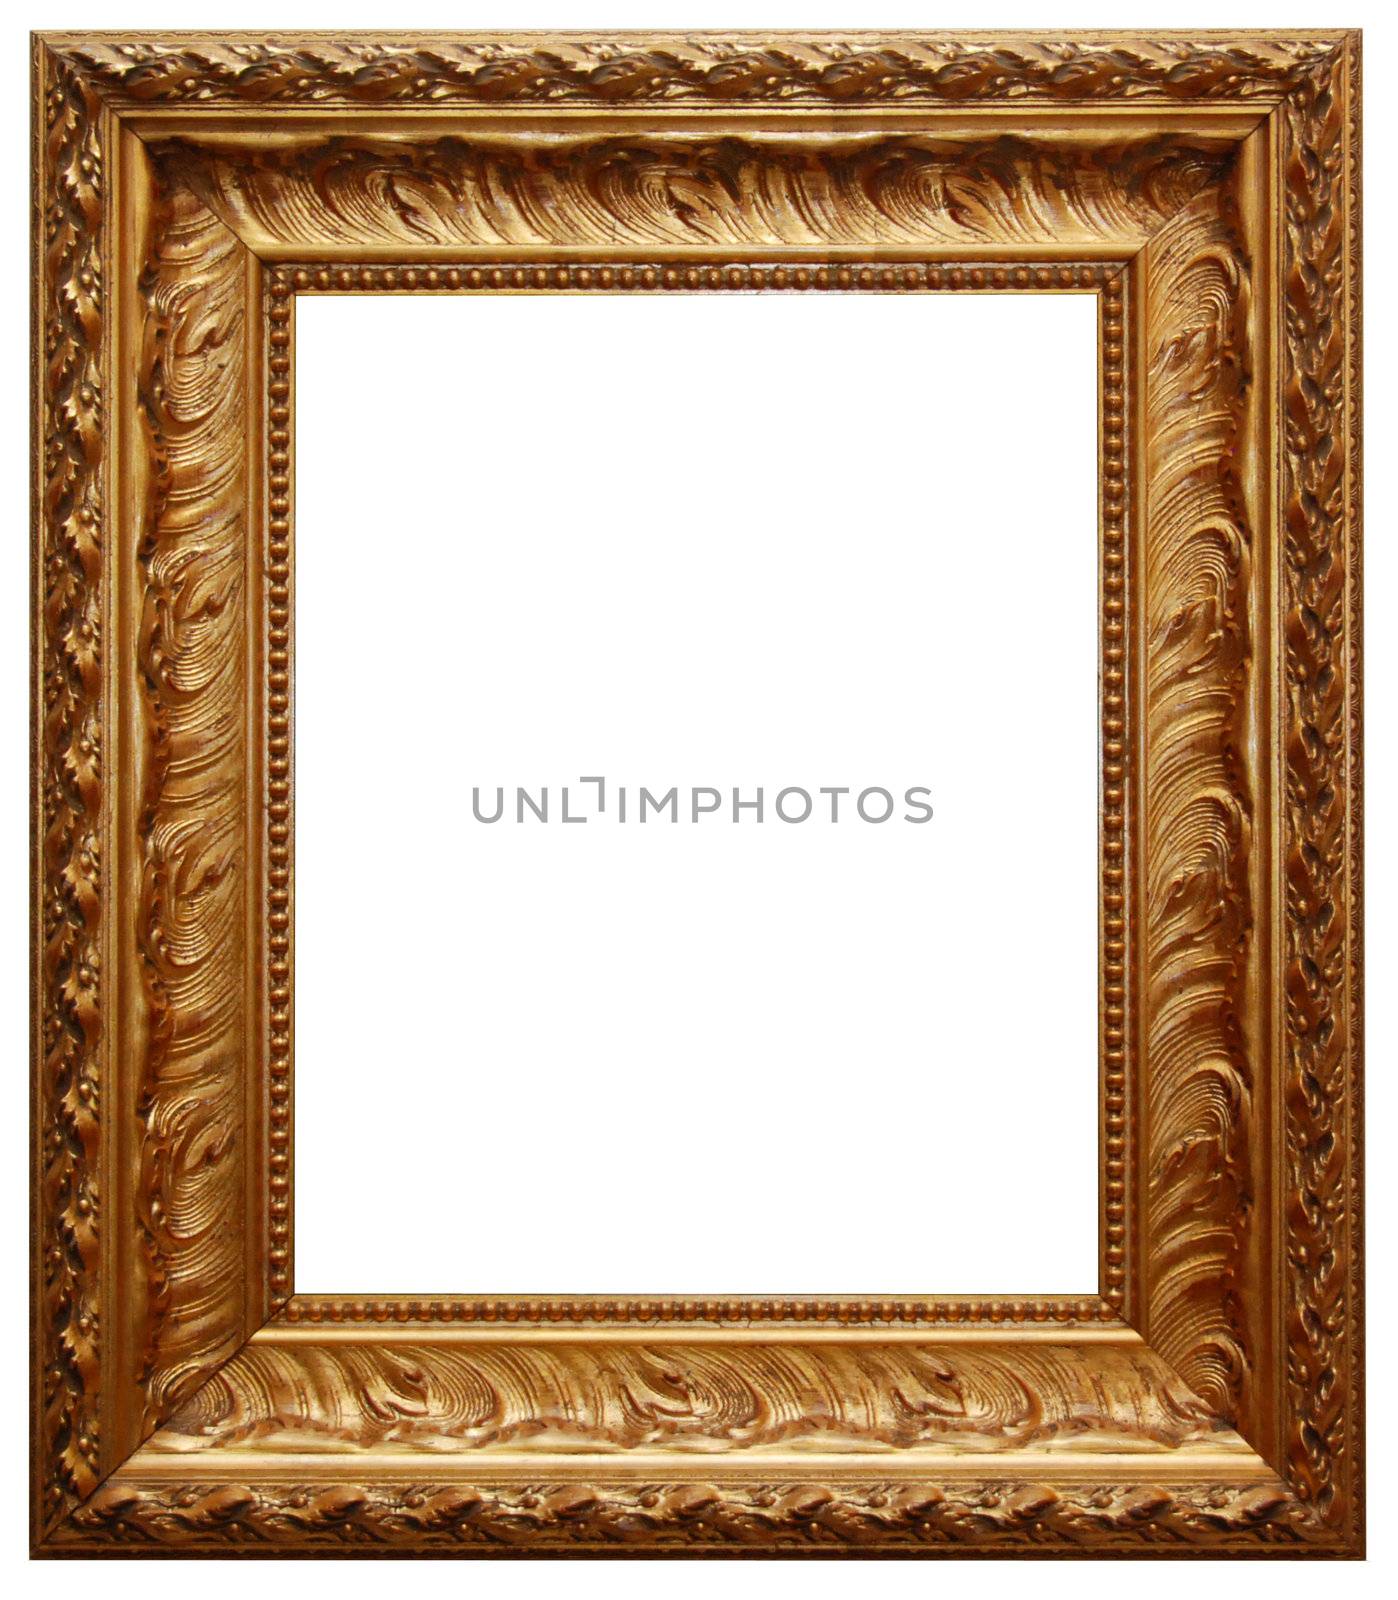 Classic gold frame by Gjermund